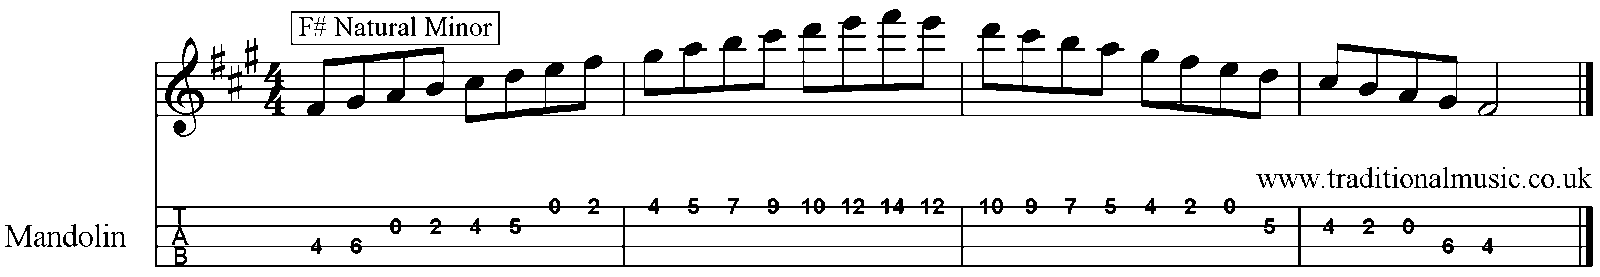 Minor Scales for Mandolin A